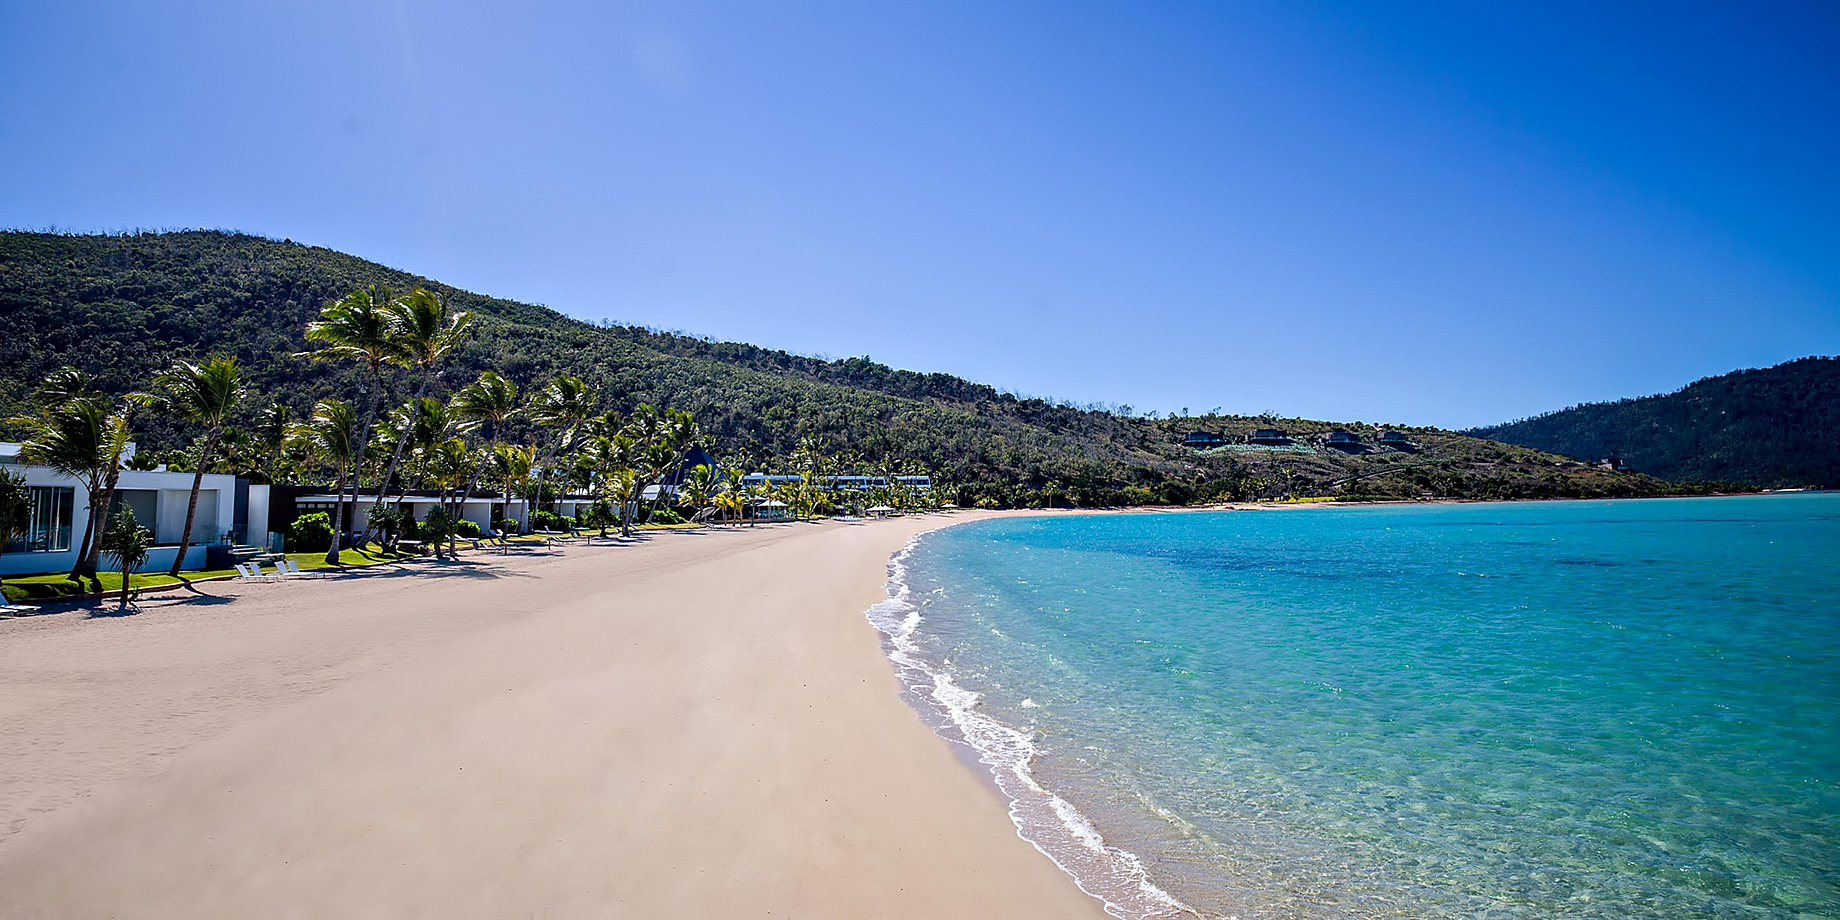 InterContinental Hayman Island Resort – Whitsunday Islands, Australia – Hayman Beach